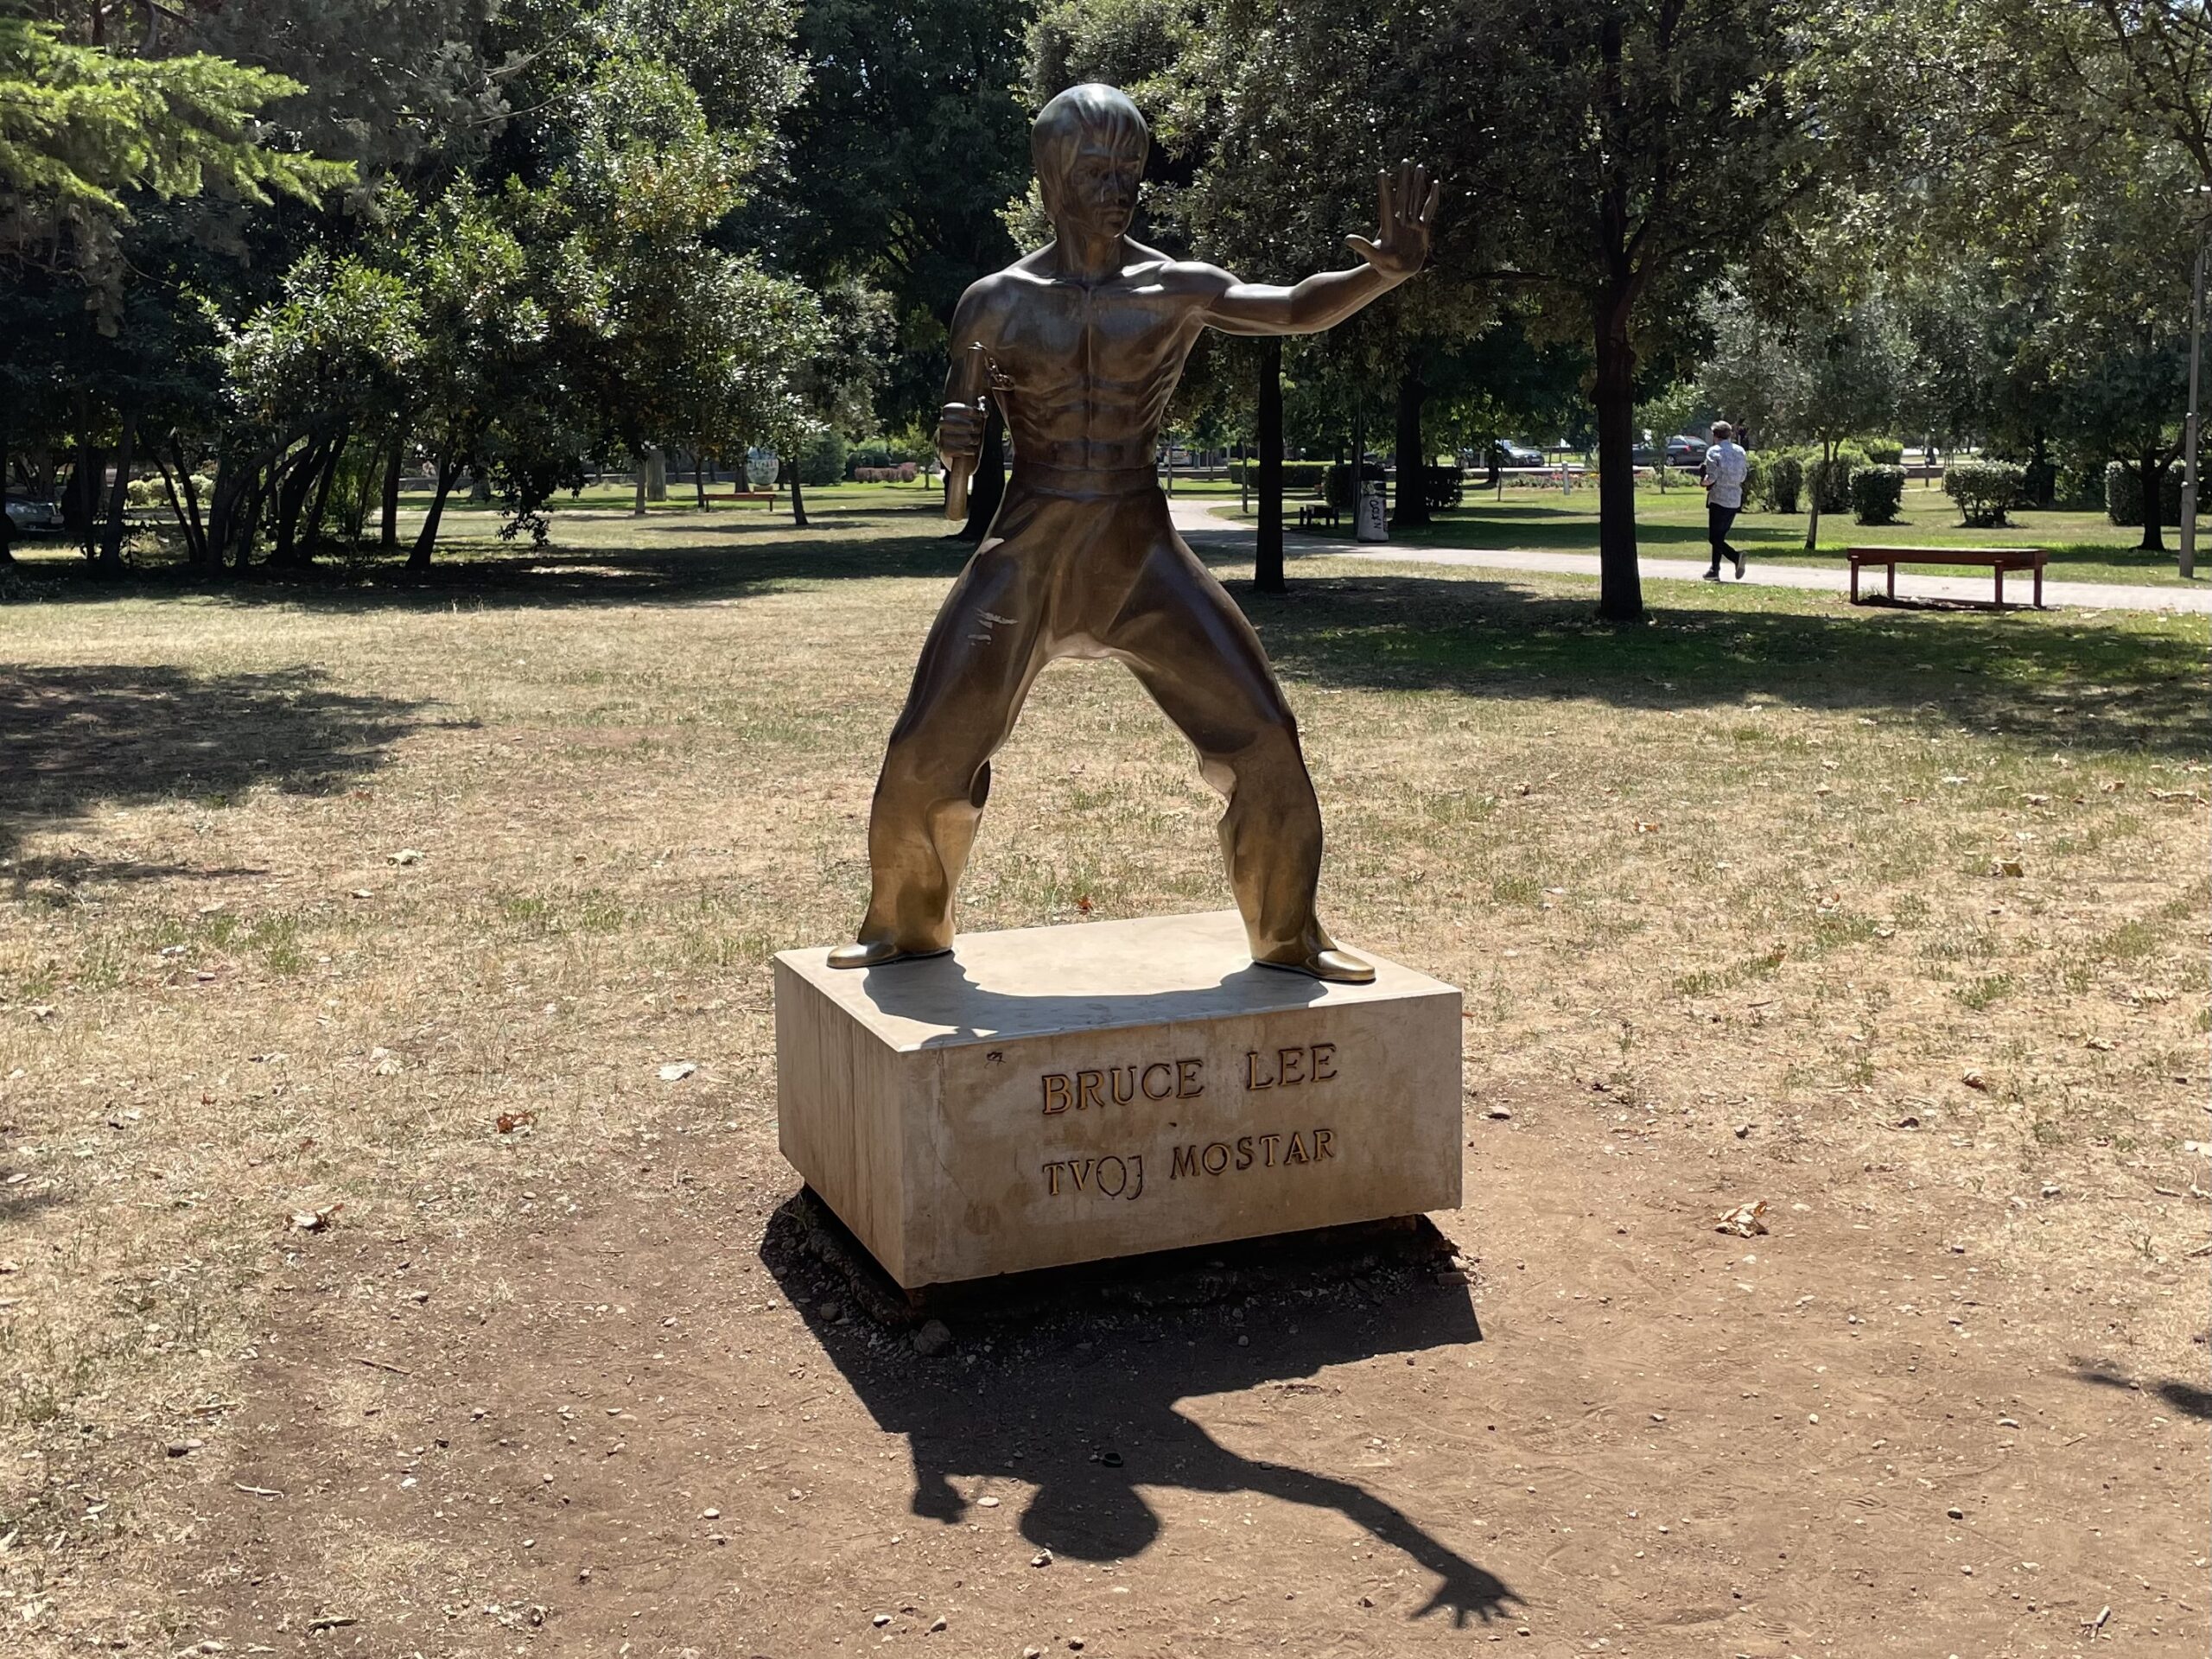 Bruce Lee standbeeld in stadspark Zrinjevac van Mostar